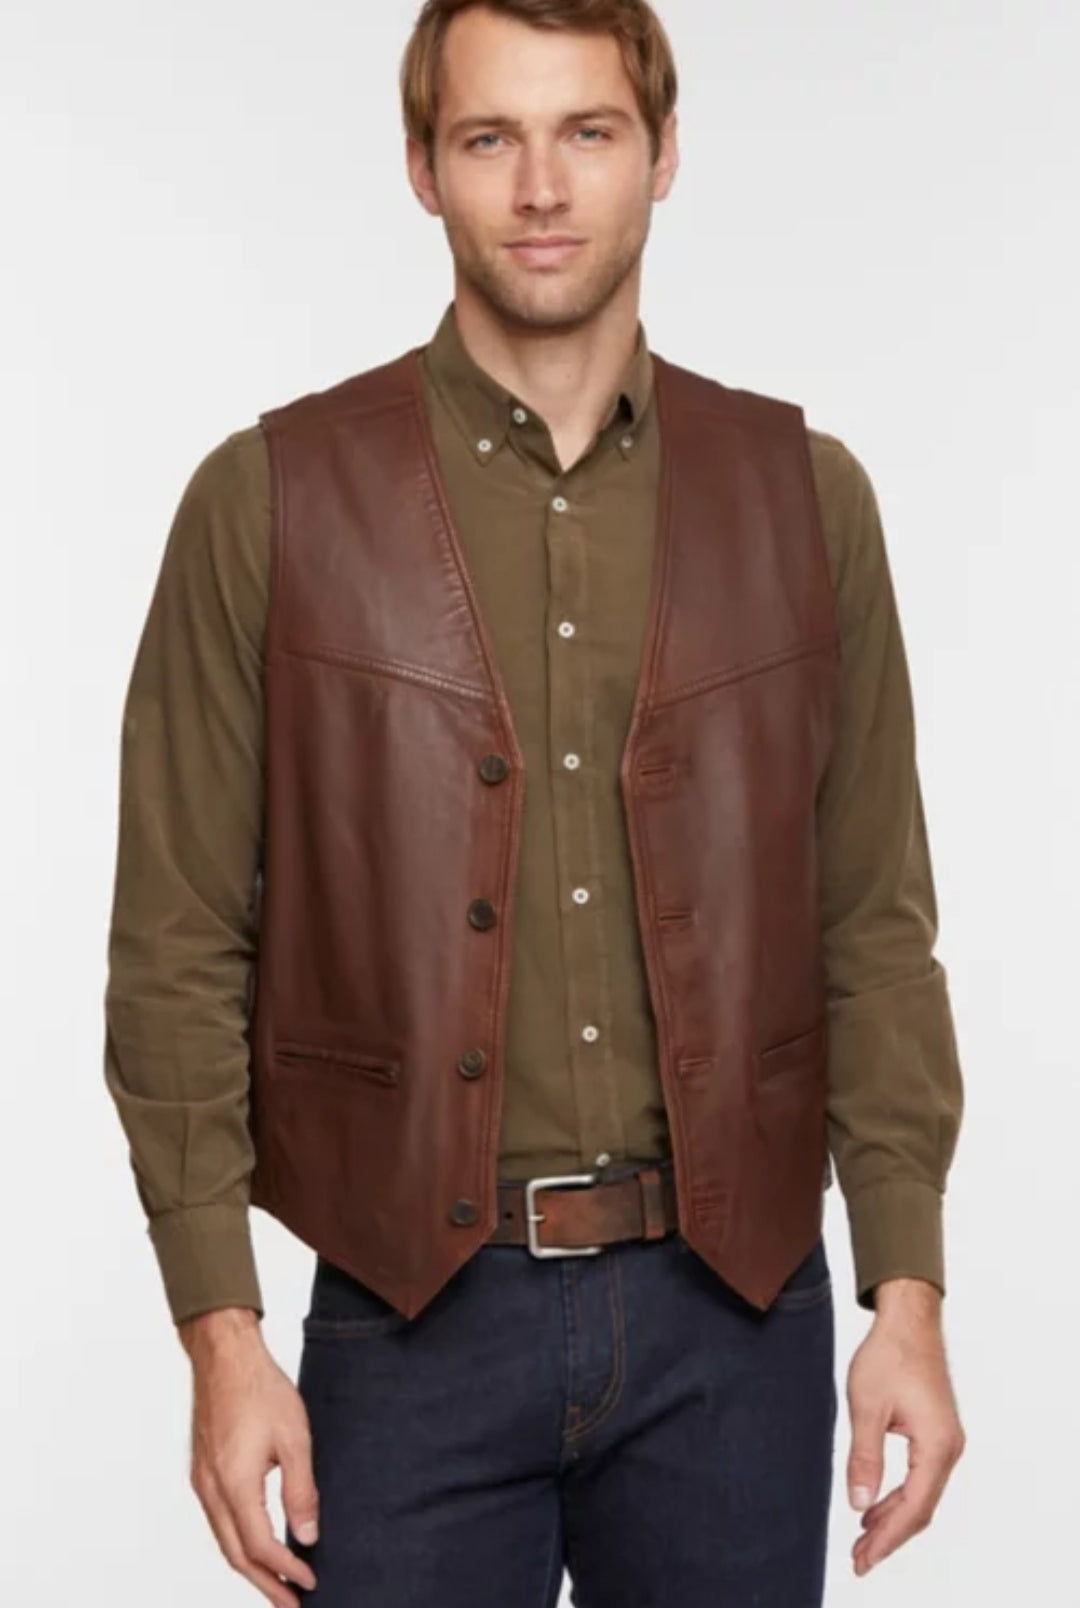 Men's Chocolate Brown Leather Vest